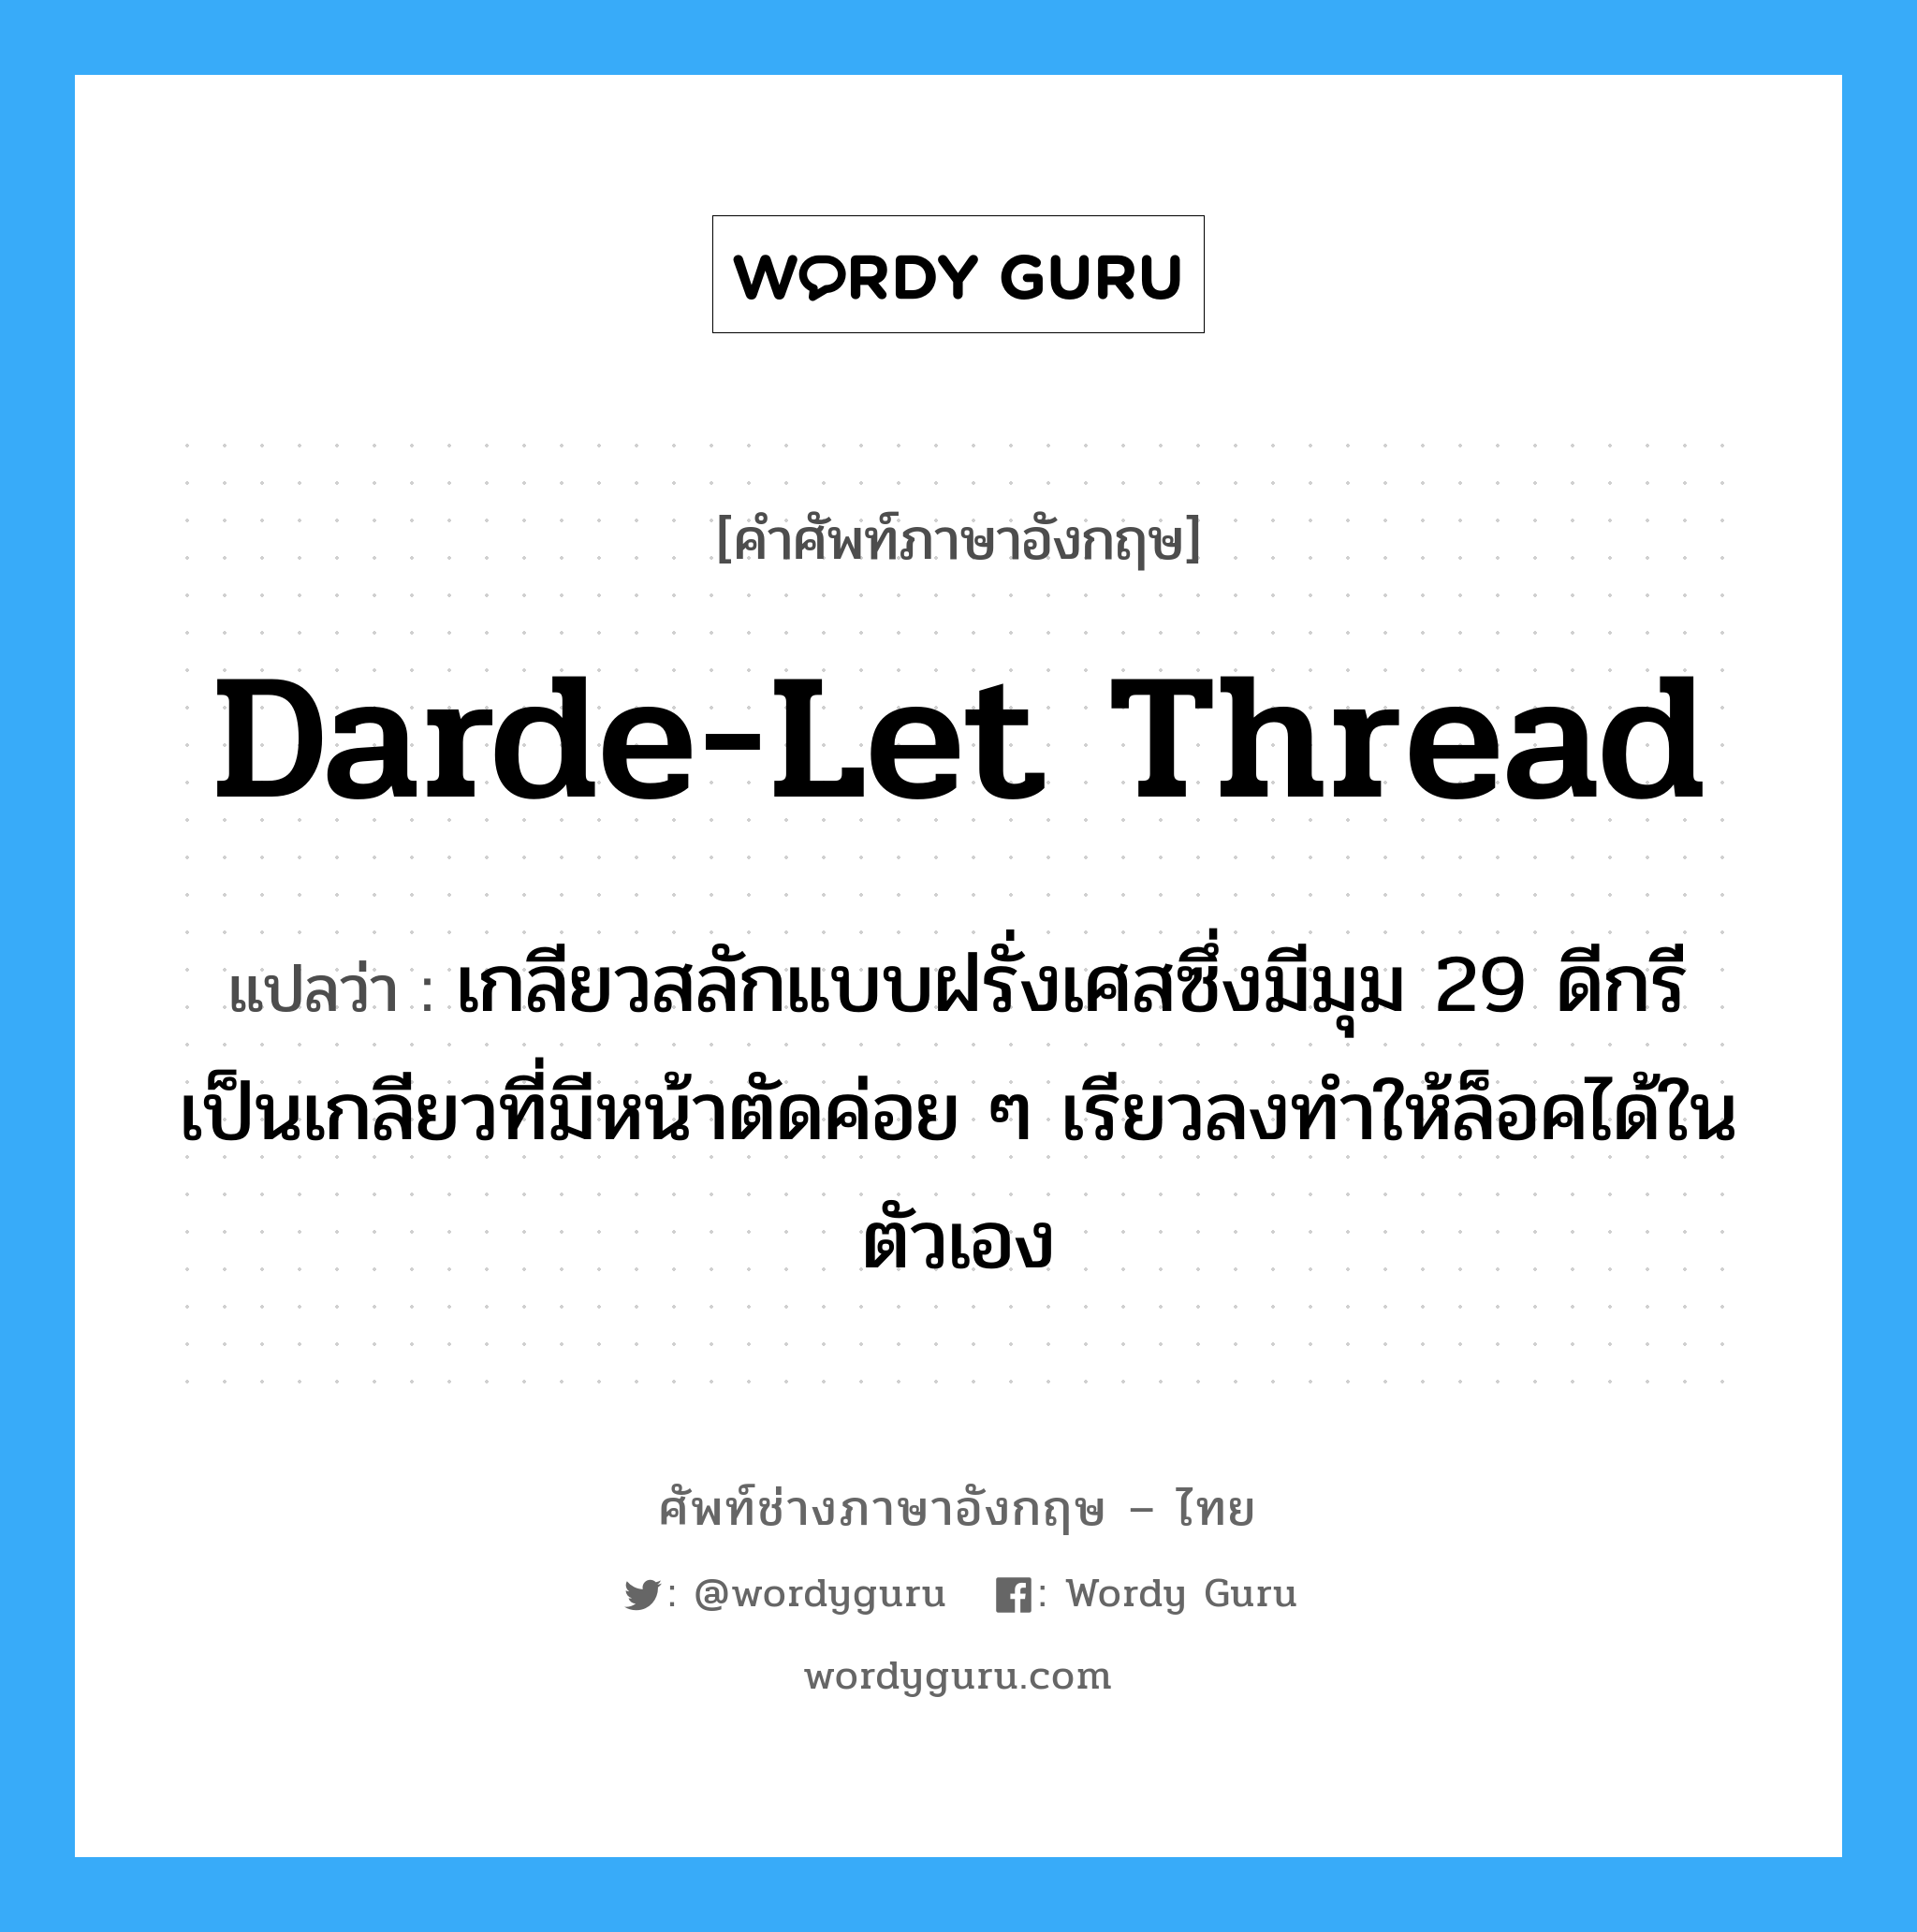 Darde-let thread แปลว่า?, คำศัพท์ช่างภาษาอังกฤษ - ไทย Darde-let thread คำศัพท์ภาษาอังกฤษ Darde-let thread แปลว่า เกลียวสลักแบบฝรั่งเศสซึ่งมีมุม 29 ดีกรี เป็นเกลียวที่มีหน้าตัดค่อย ๆ เรียวลงทำให้ล็อคได้ในตัวเอง